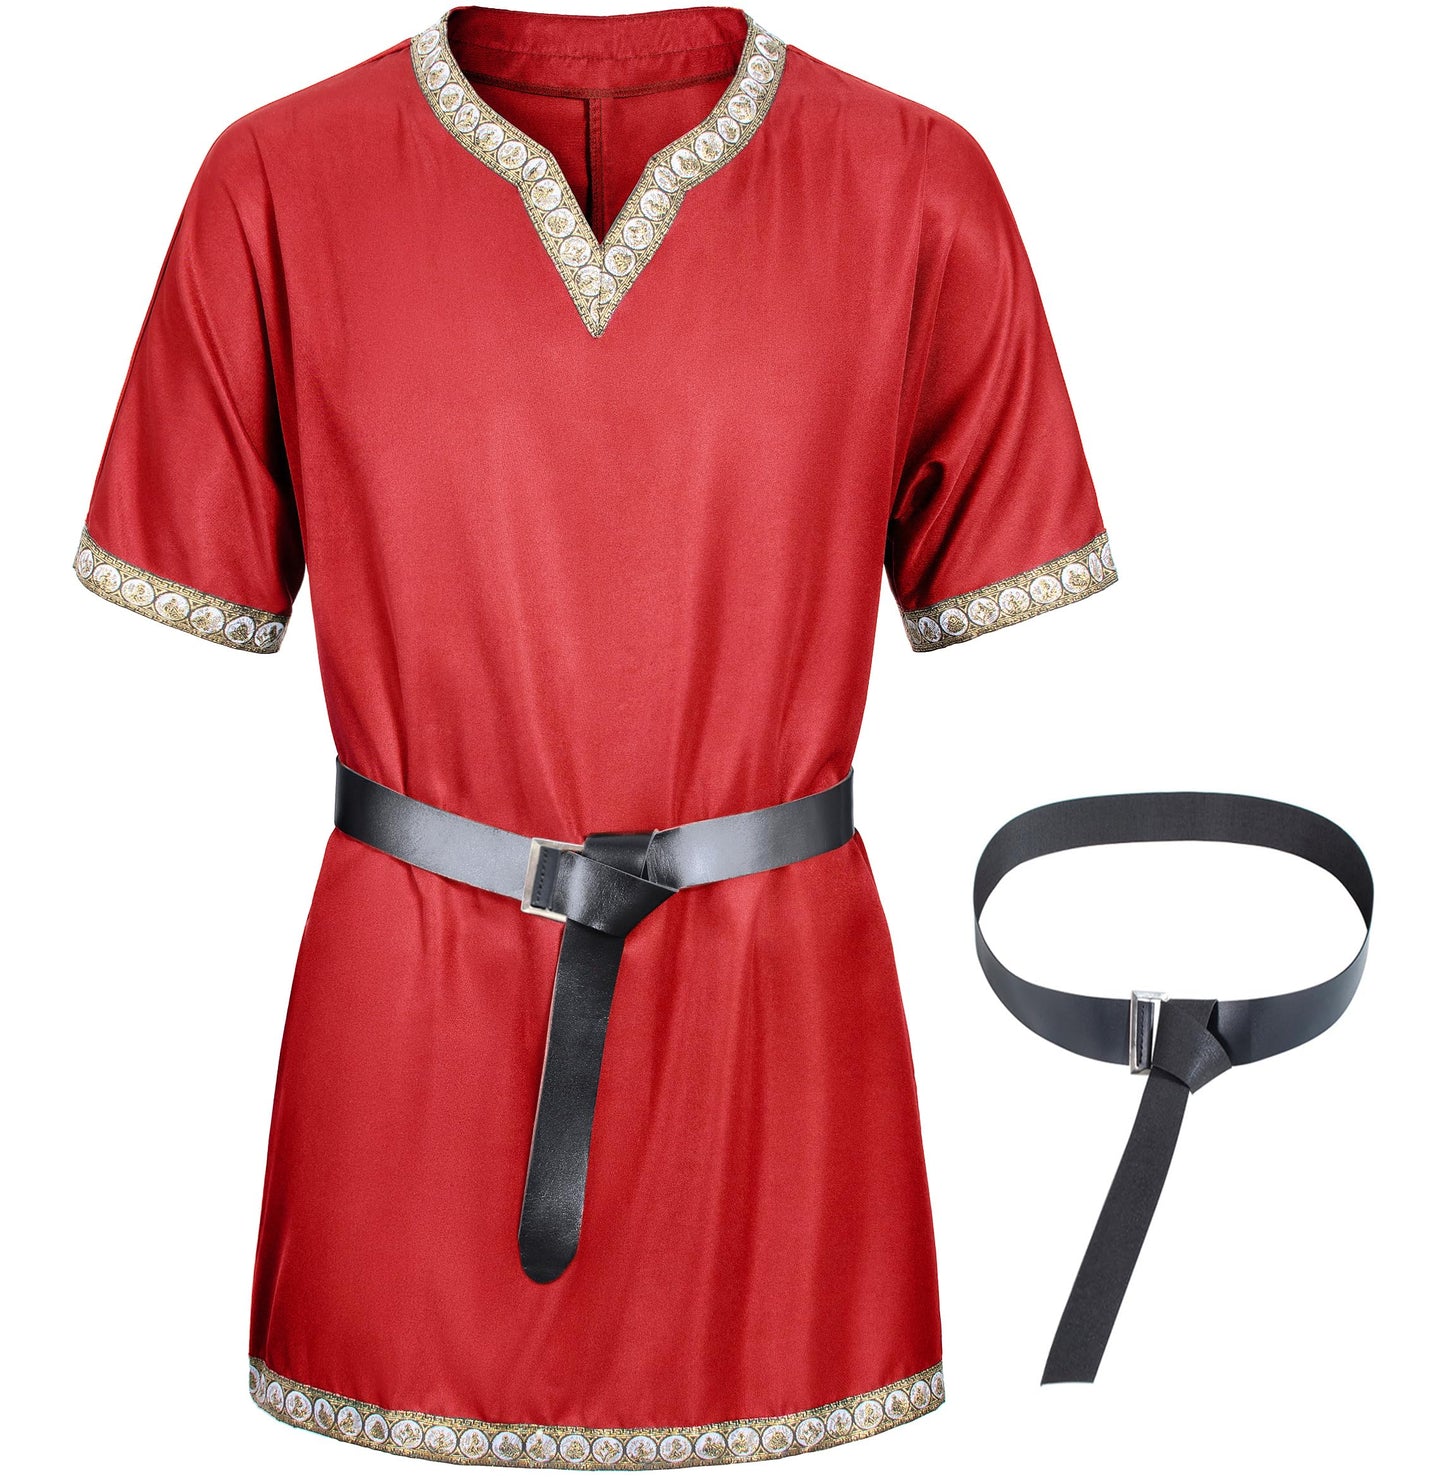 Mens Medieval Costume Viking Tunic